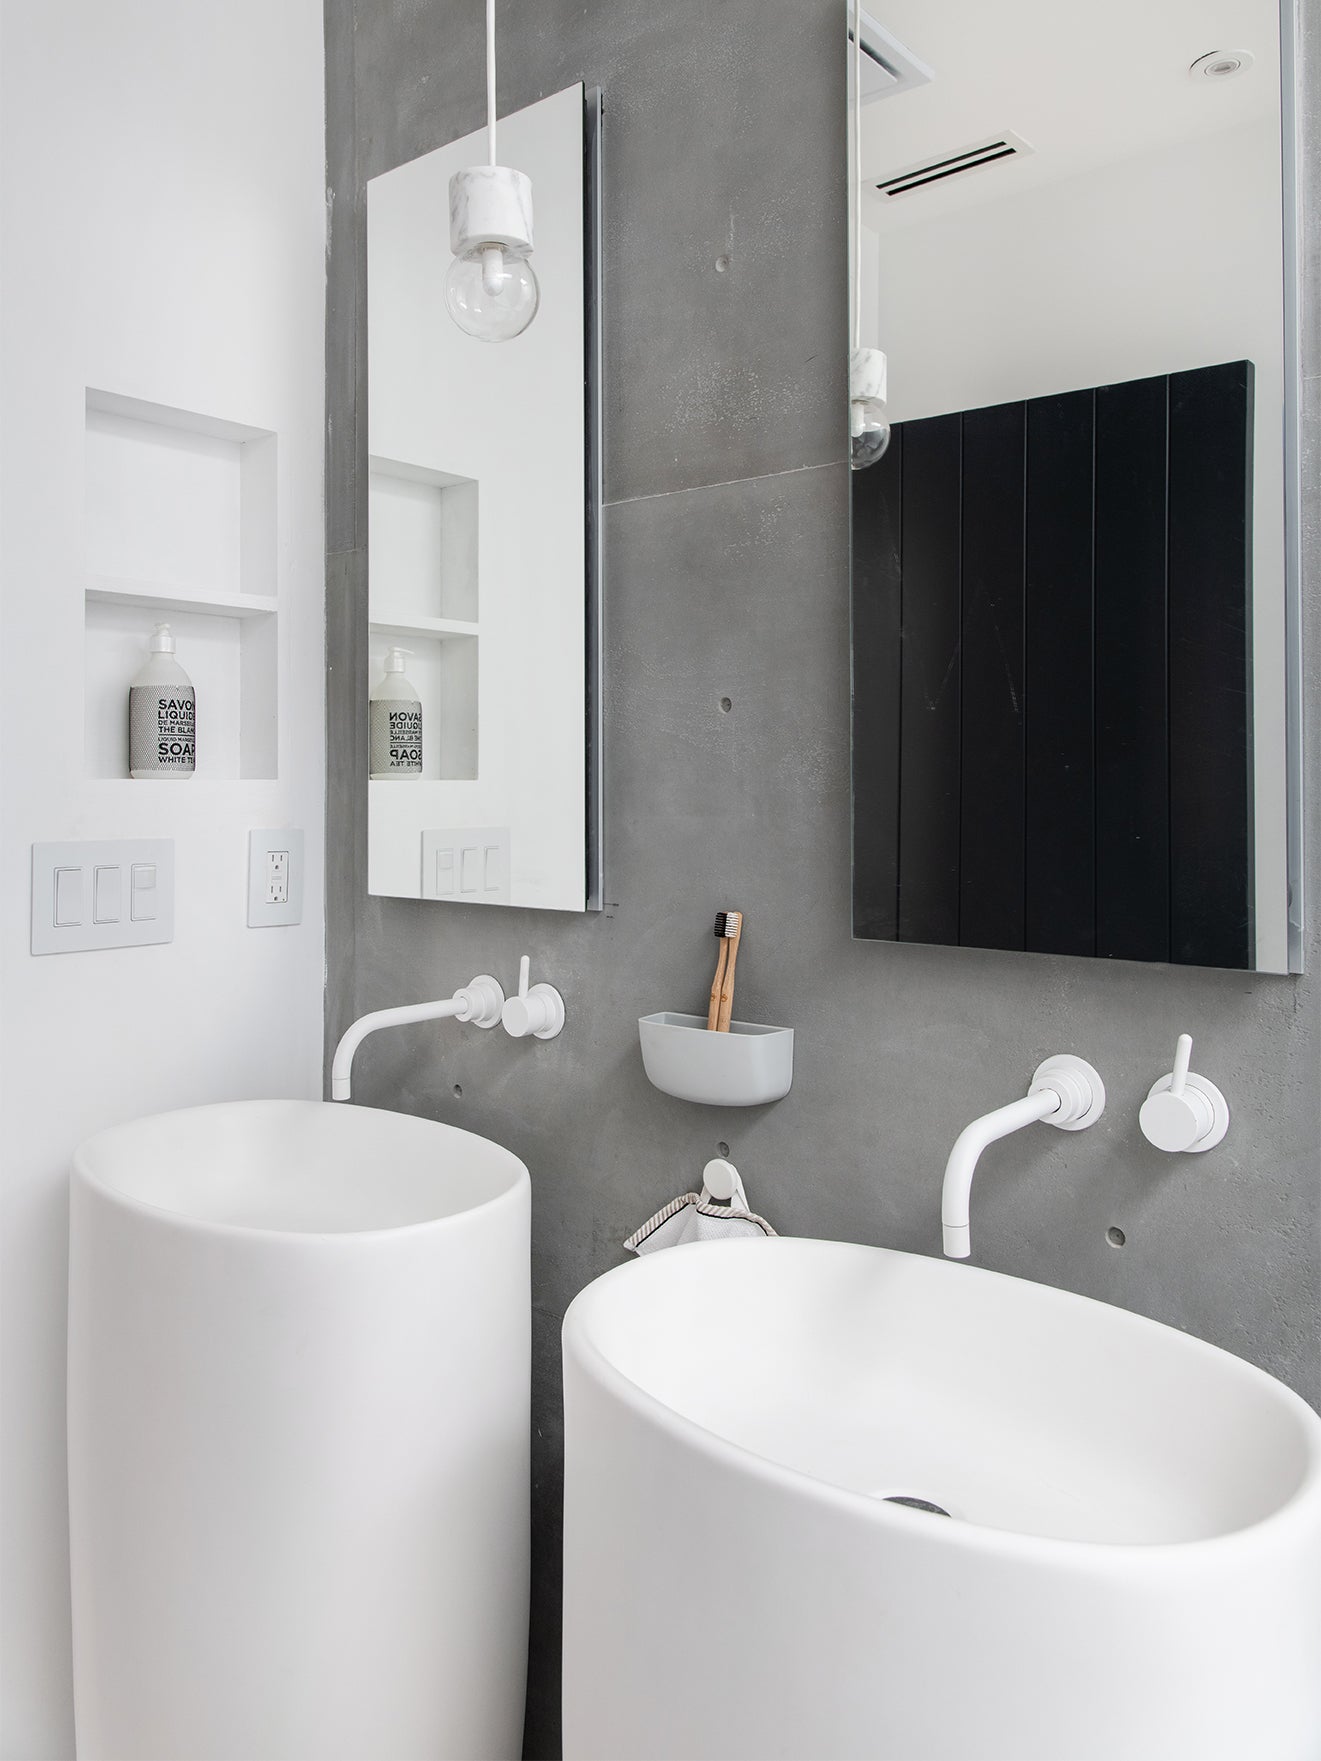 white column pedestal sinks in gray bathroom